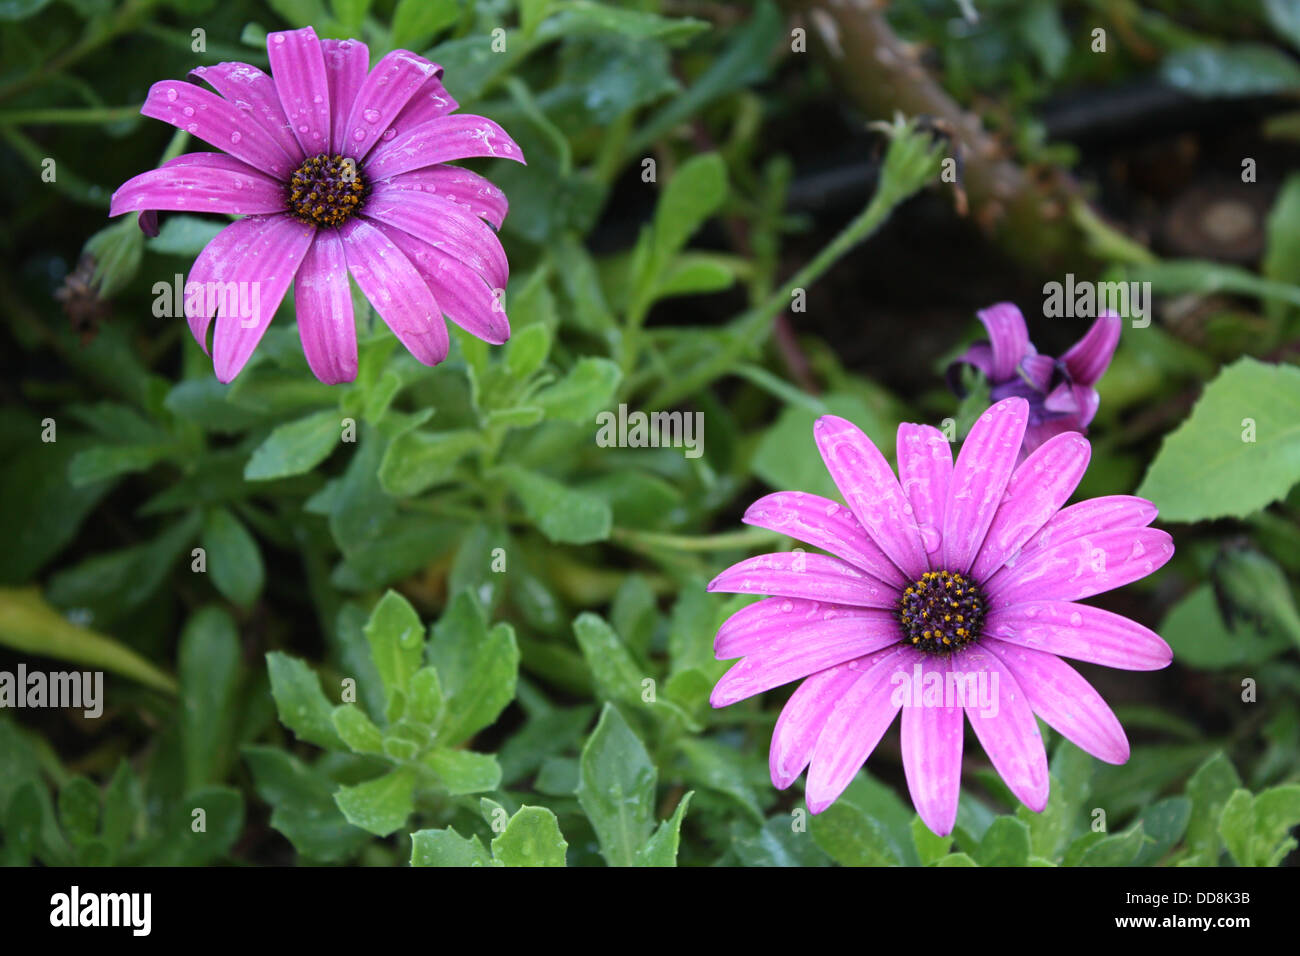 Two pink wild daisies Stock Photo